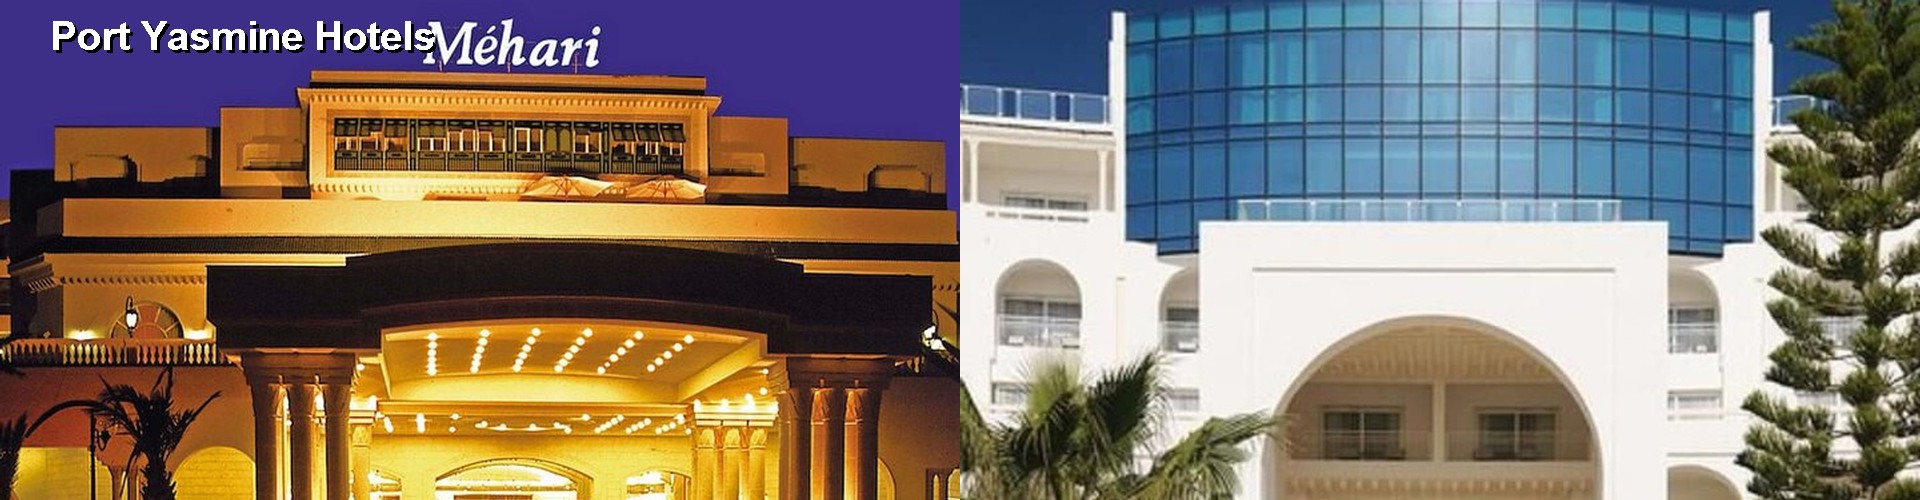 5 Best Hotels near Port Yasmine